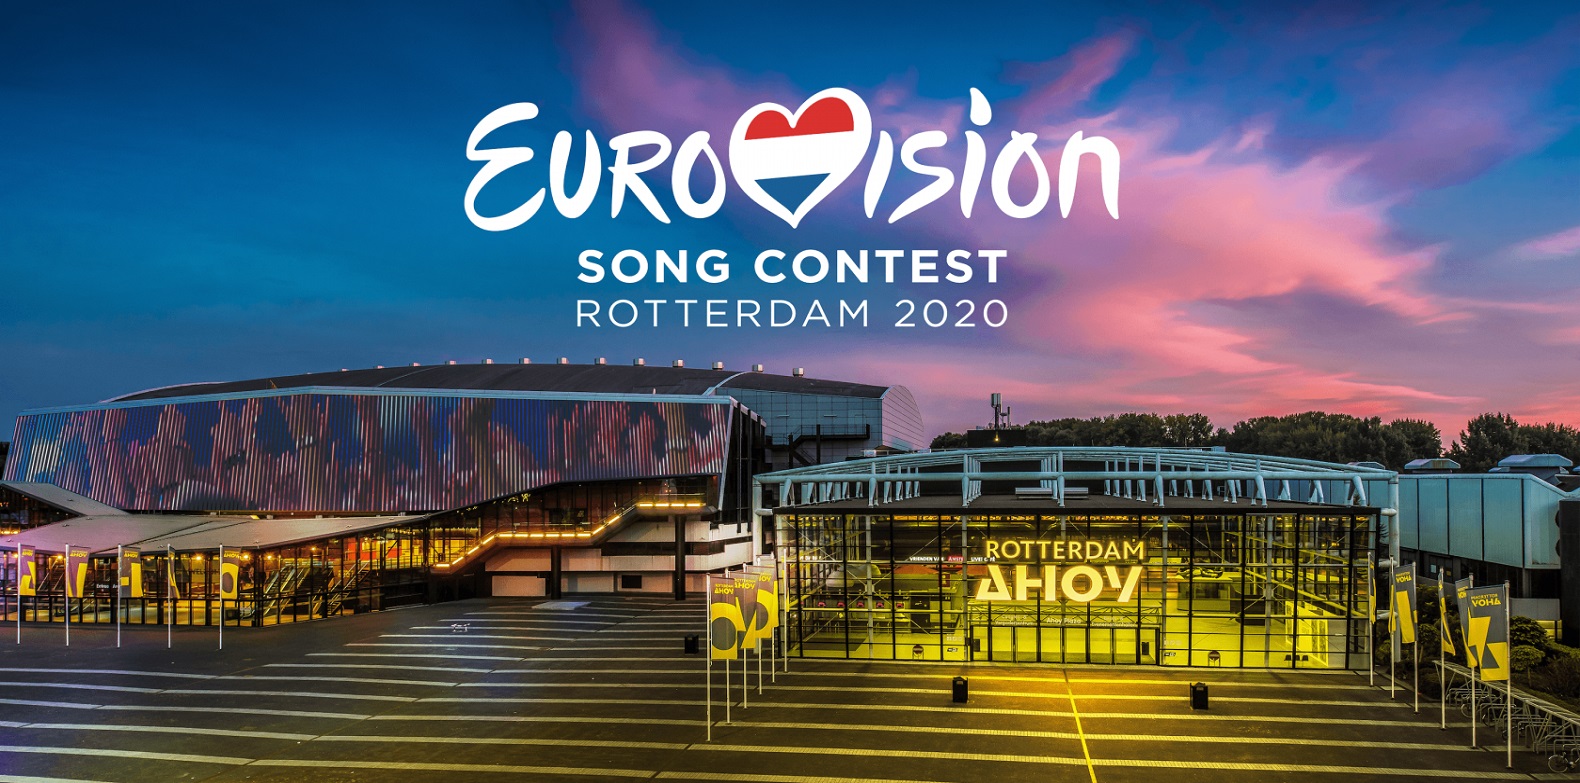 Eurovision 2020: Άρχισαν οι κόντρες για το τραγούδι που θα εκπροσωπήσει την Ελλάδα - Φωτογραφία 1